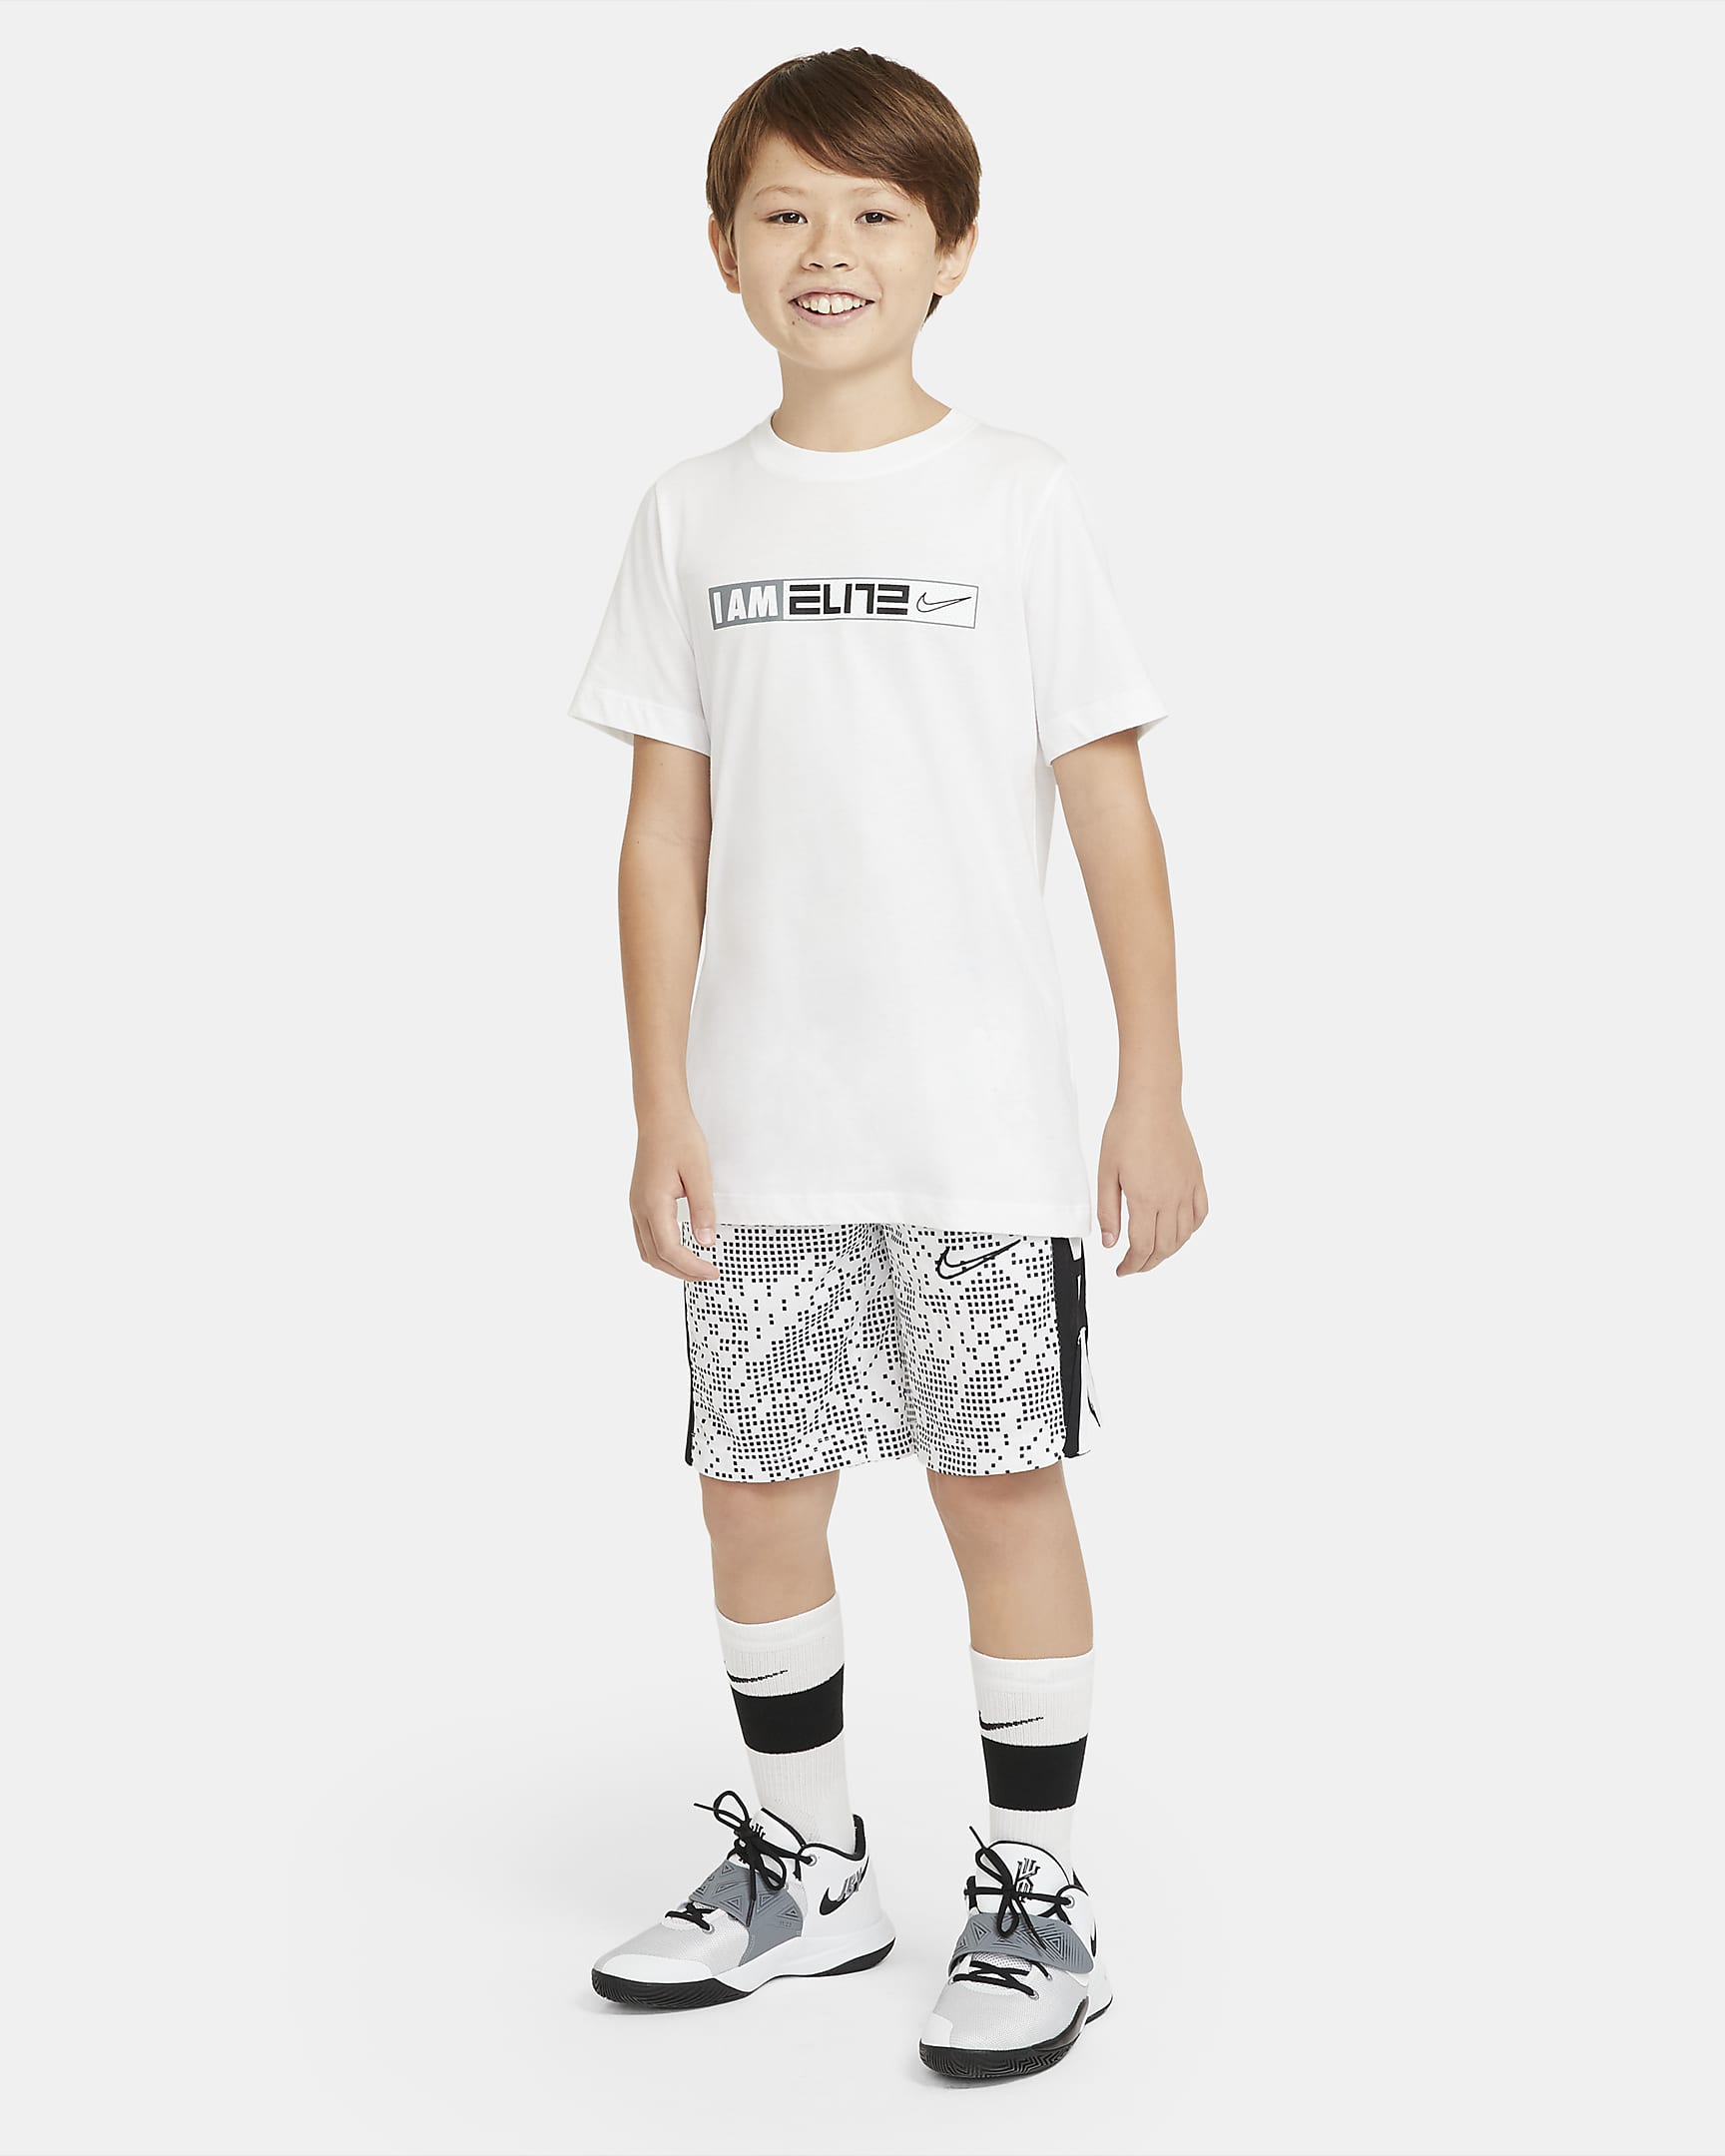 Nike Elite Big Kids' (Boys') Printed Basketball Shorts. Nike.com